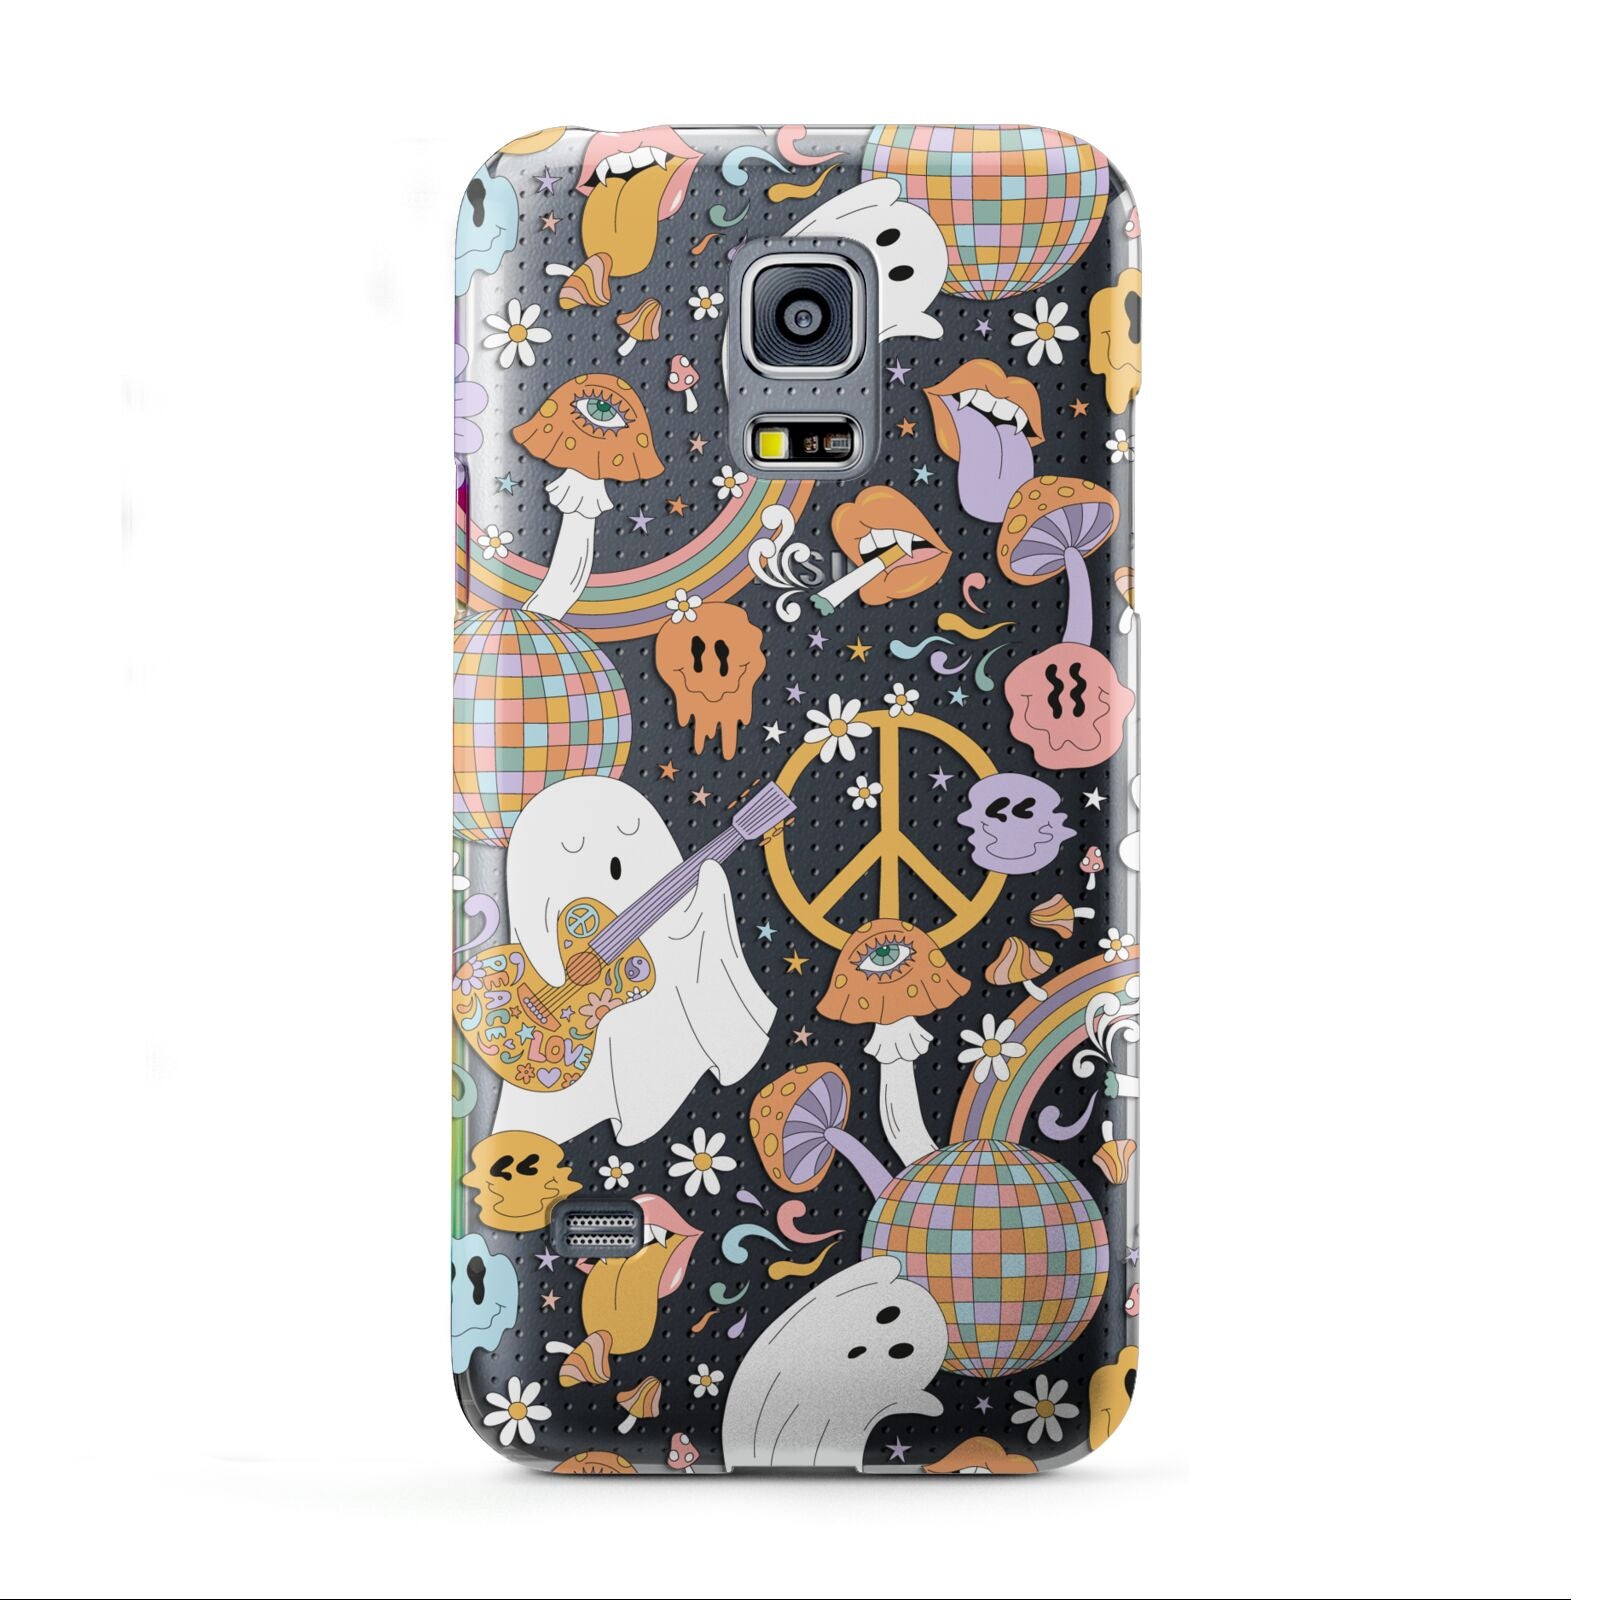 Disco Ghosts Samsung Galaxy S5 Mini Case